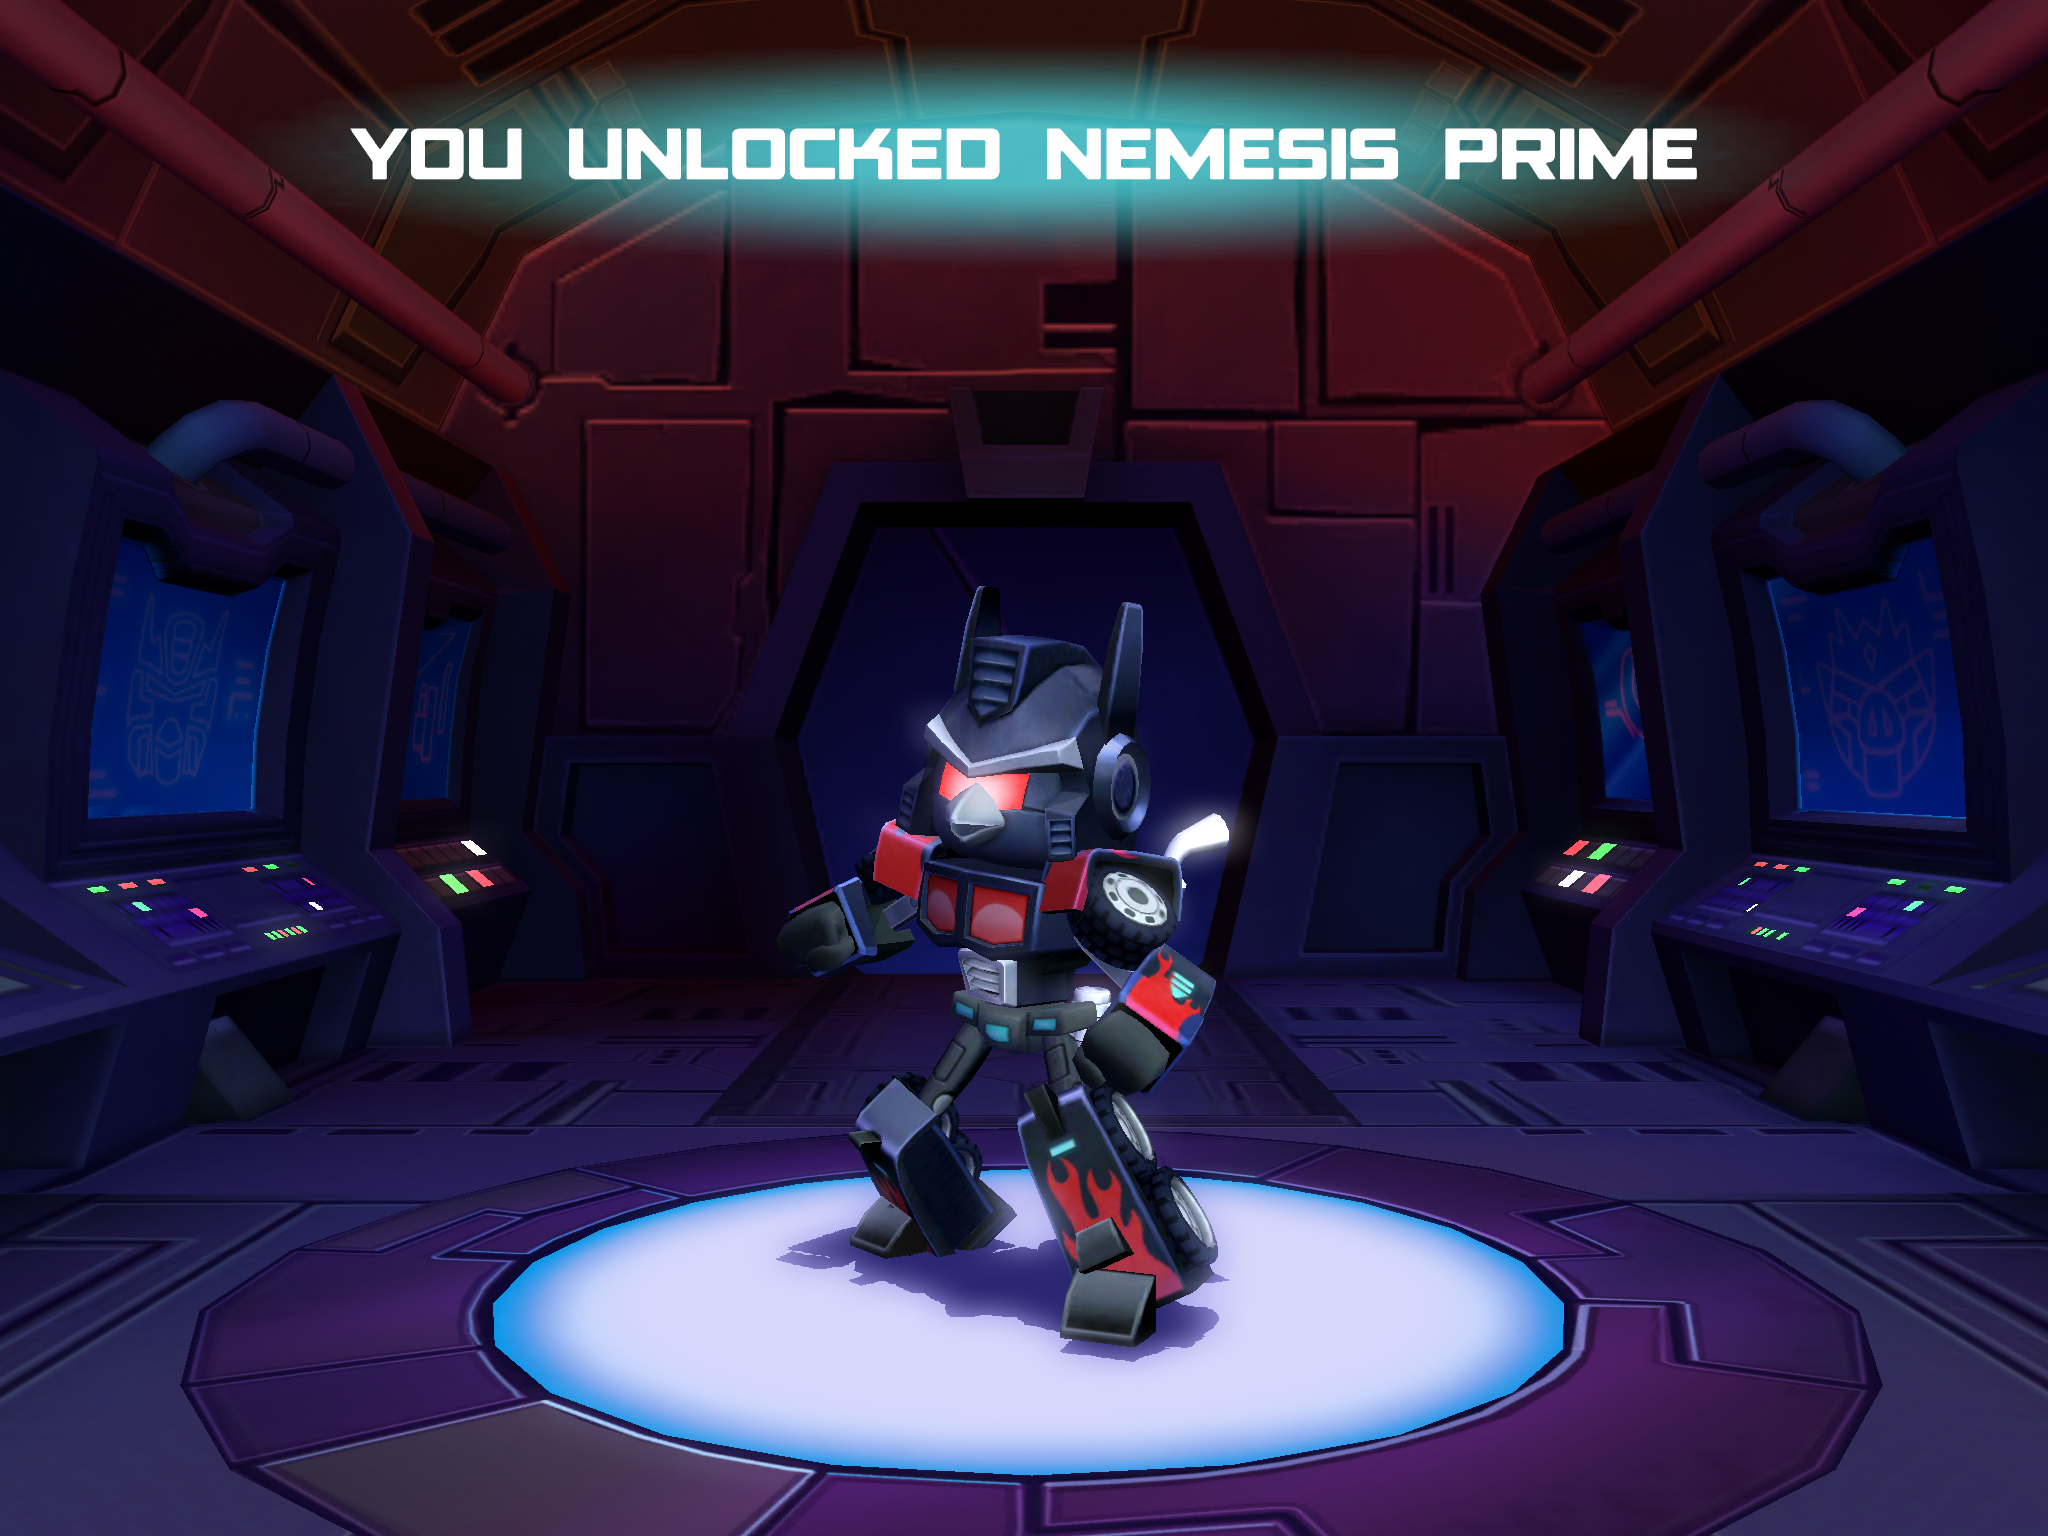 I unlocked Nemesis Prime!